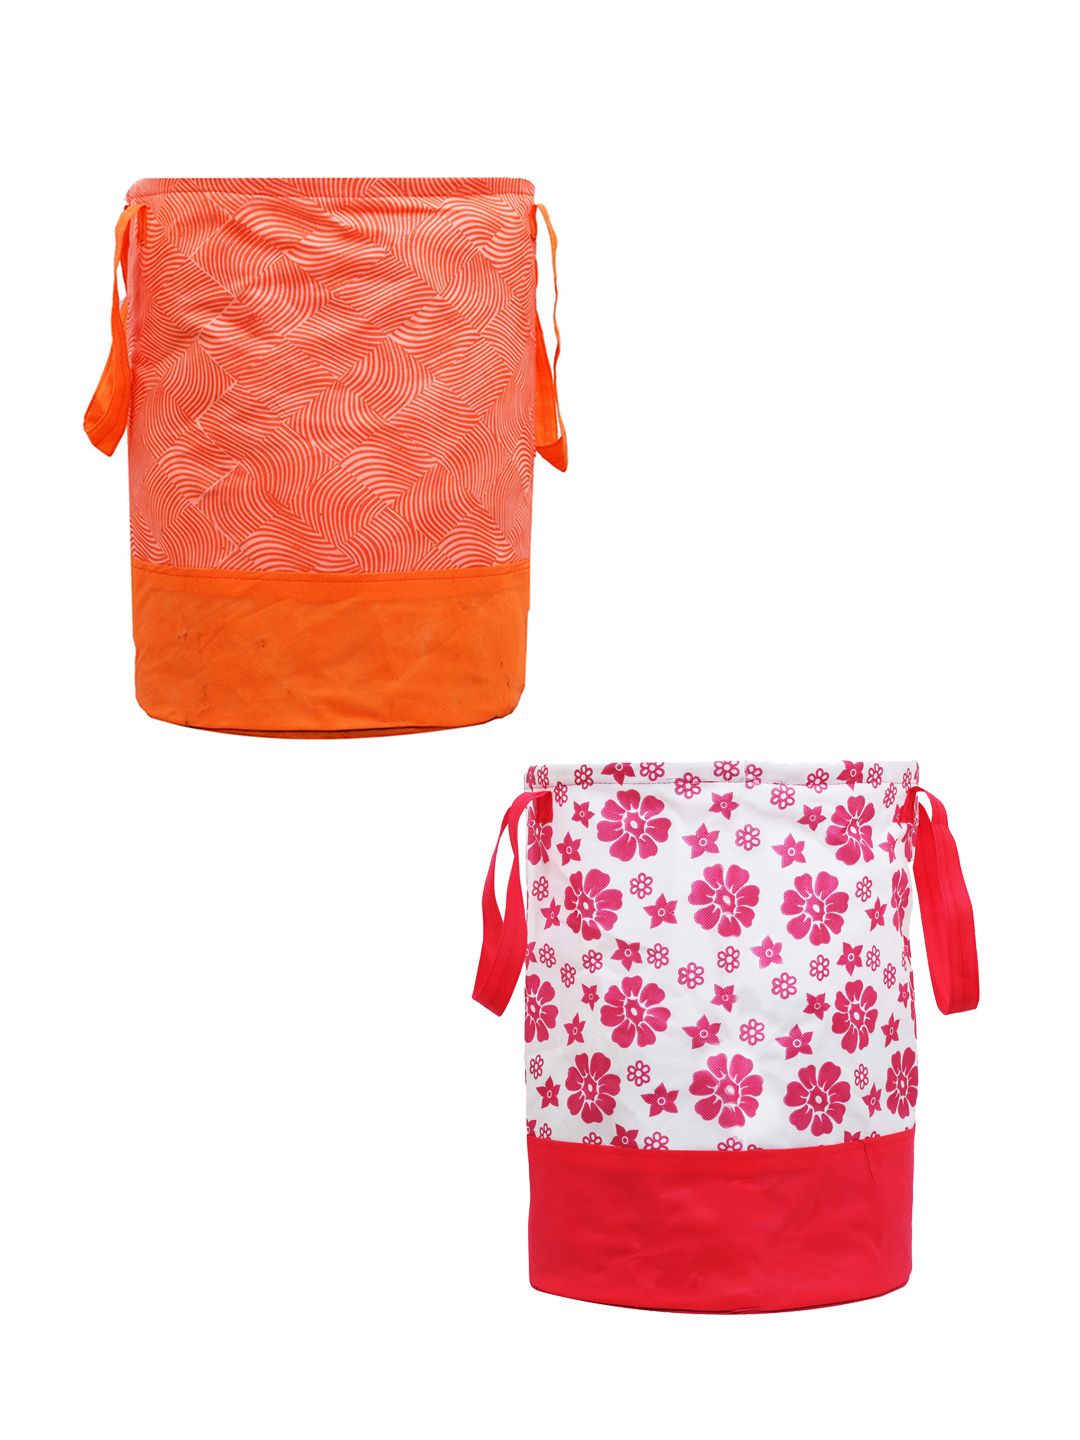 Kuber Industries Set Of 2 Pink & Orange Printed Waterproof Canvas Laundry Bags 45 L Price in India